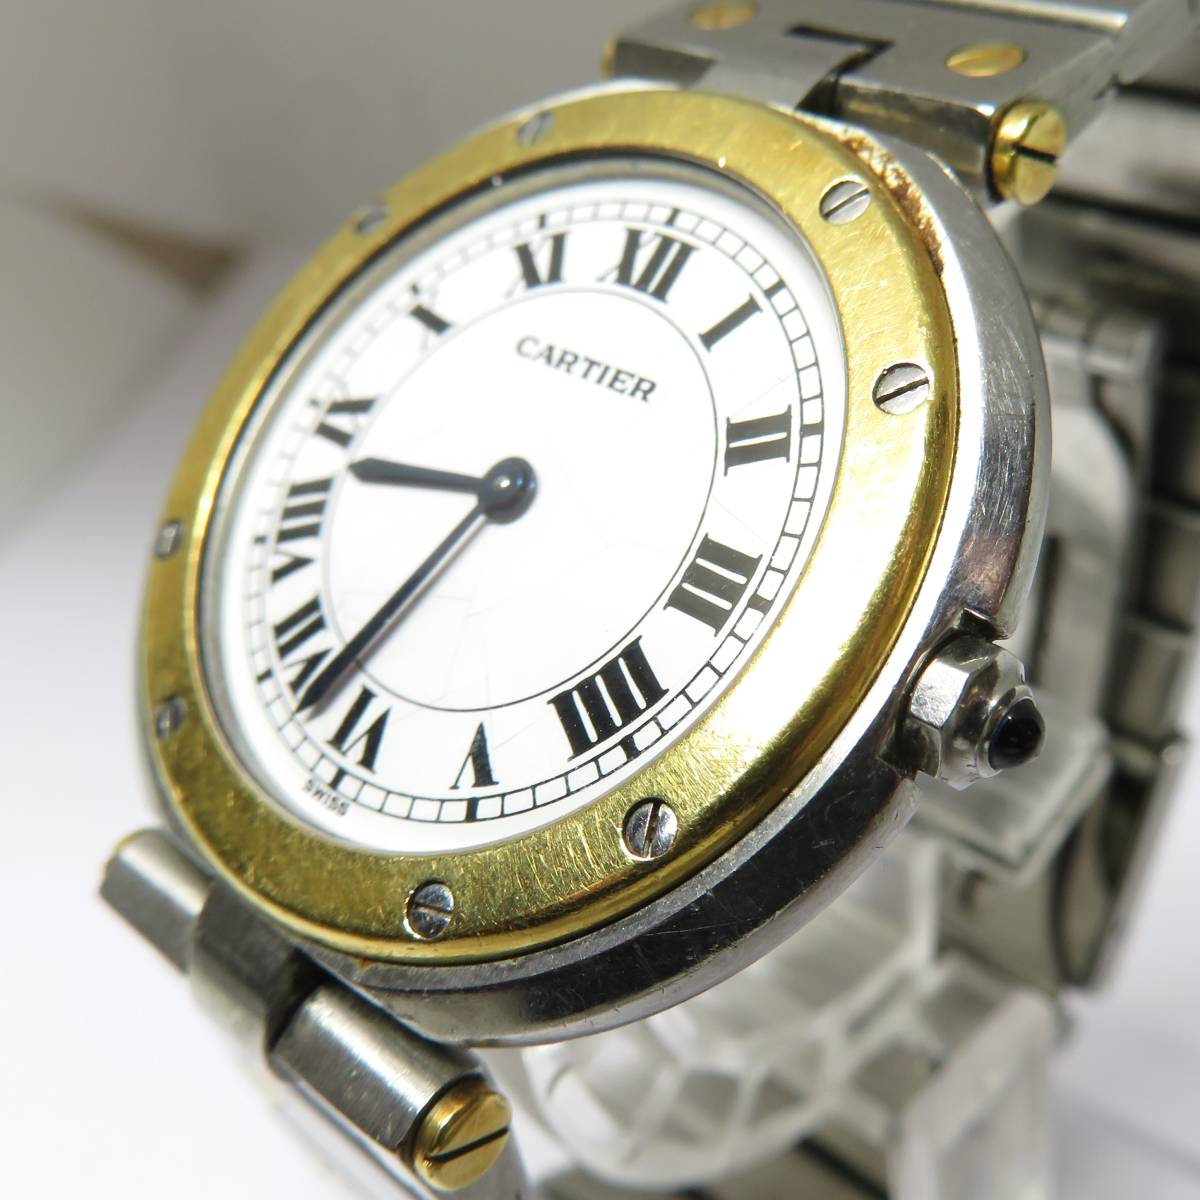  Cartier sun tos quarts wristwatch * operation guarantee none 